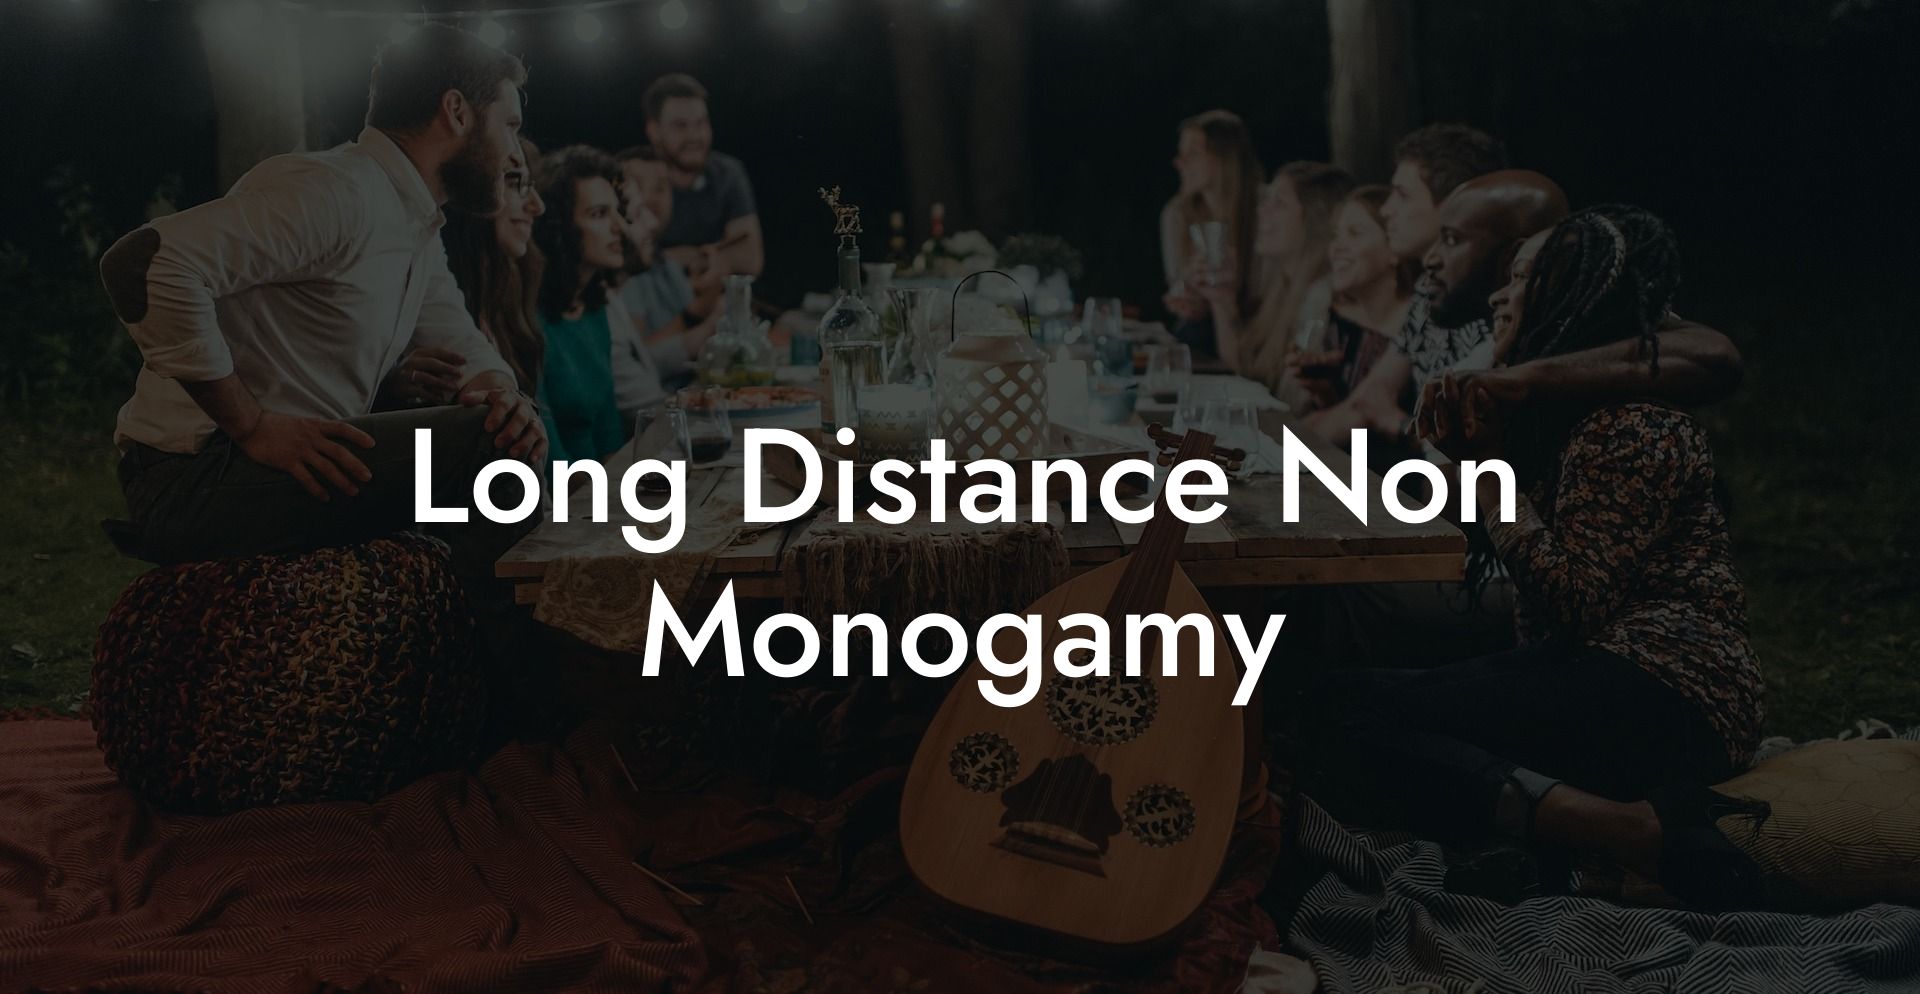 Long Distance Non Monogamy